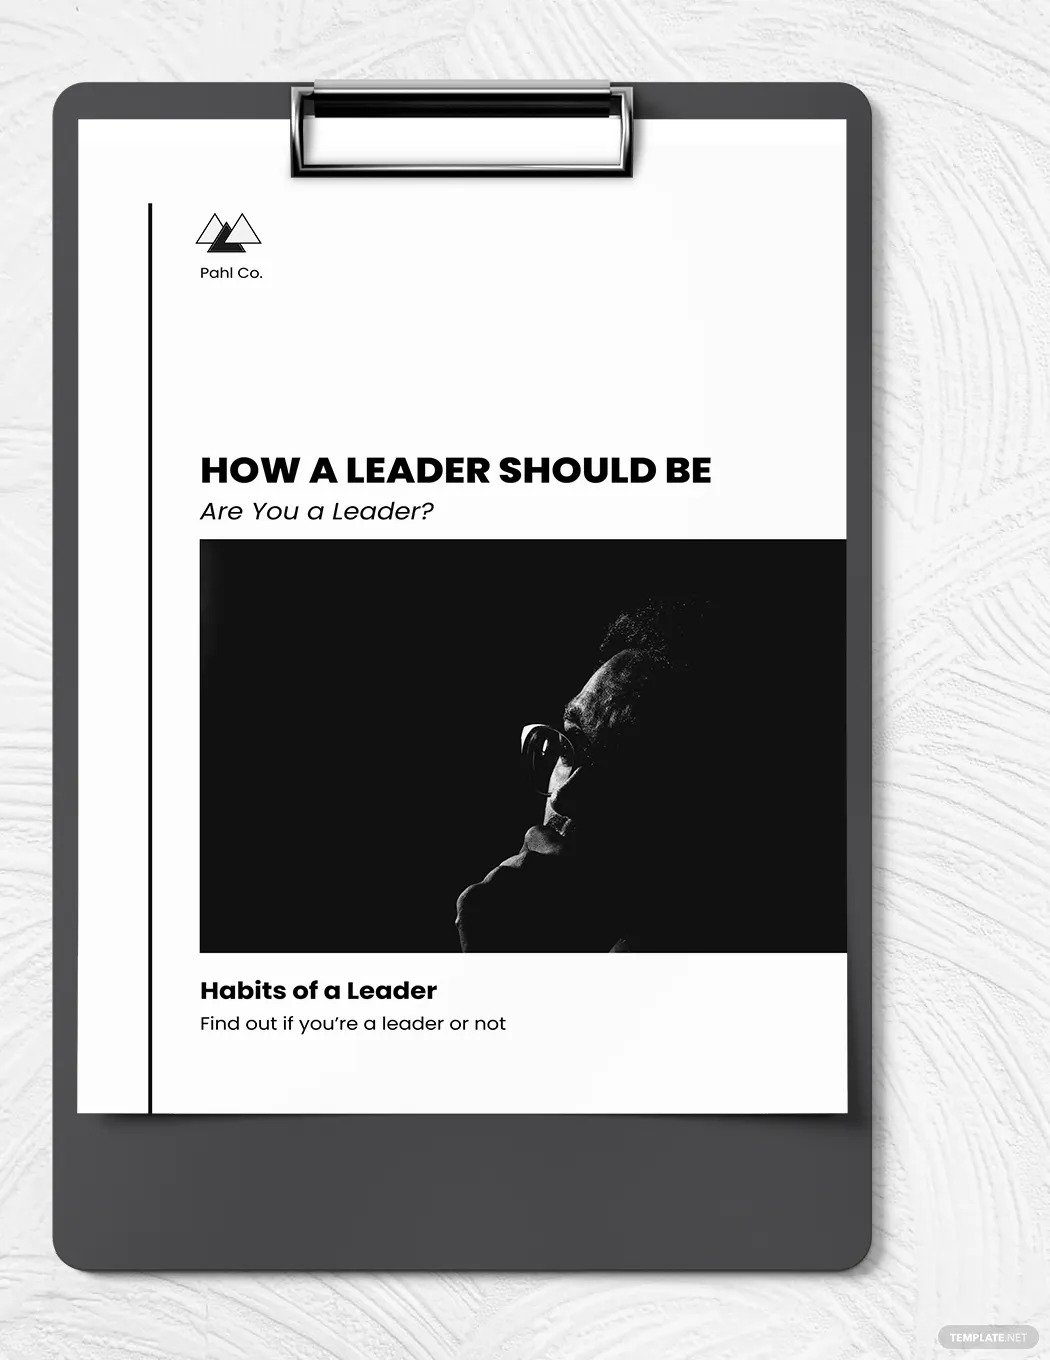 leadership ebook